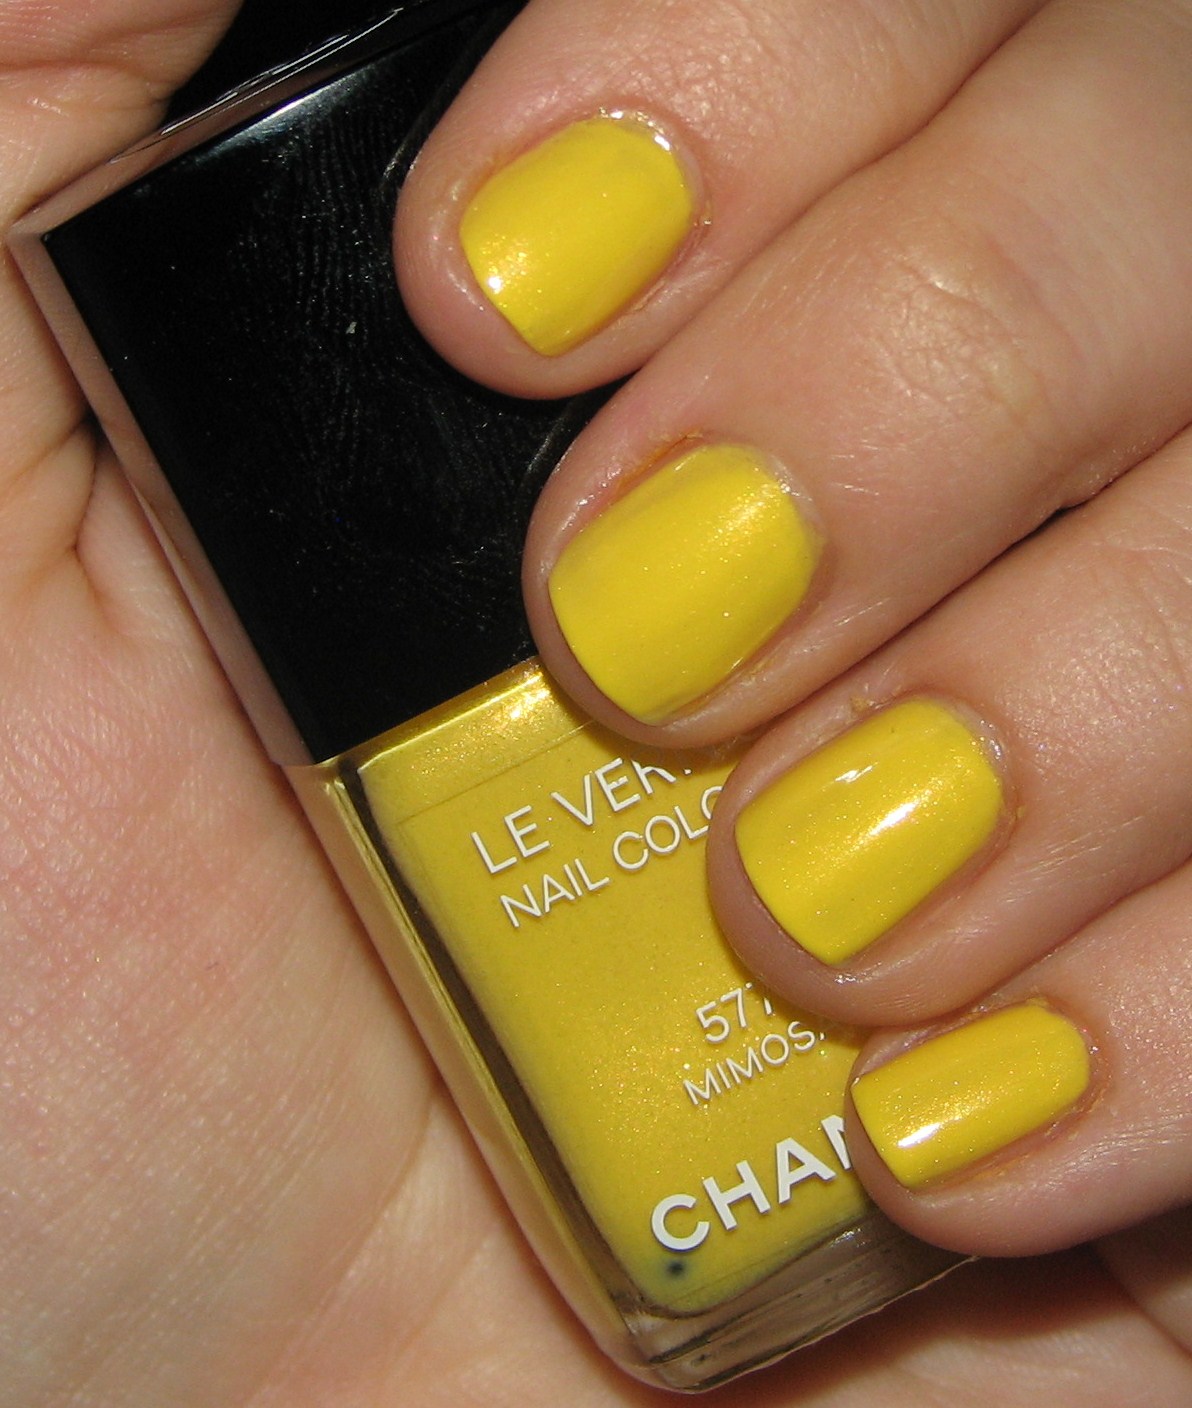 Slette Bliv Sag Chanel Mimosa (577) Le Vernis Nail Colour Review & Swatches - Blushing Noir